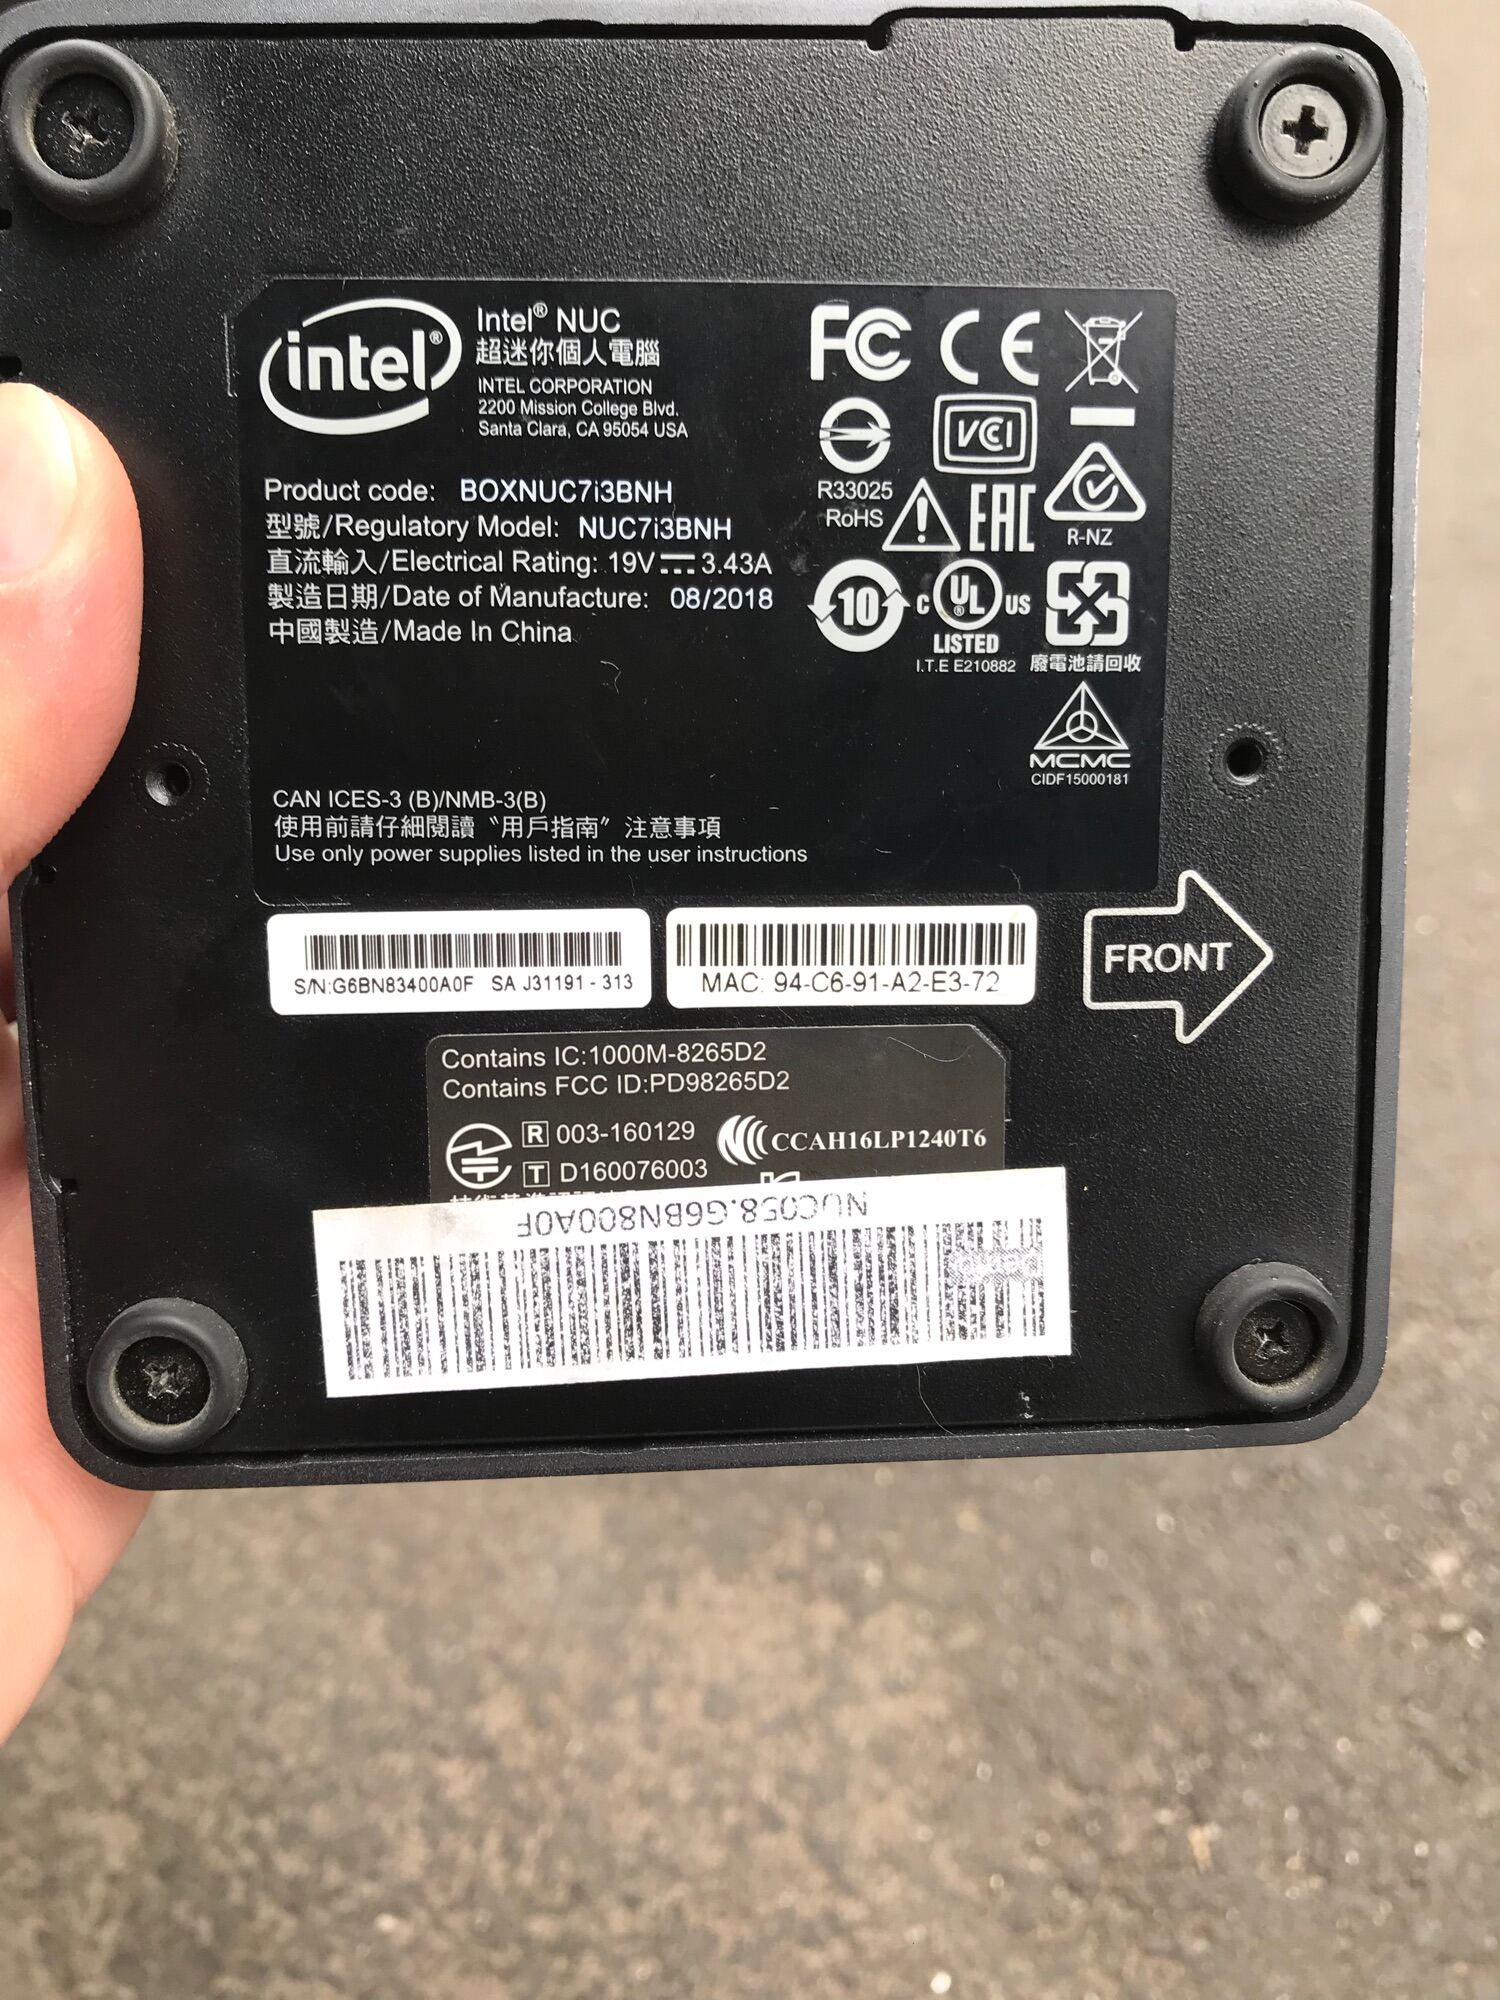 Intel Nuc i3 th7